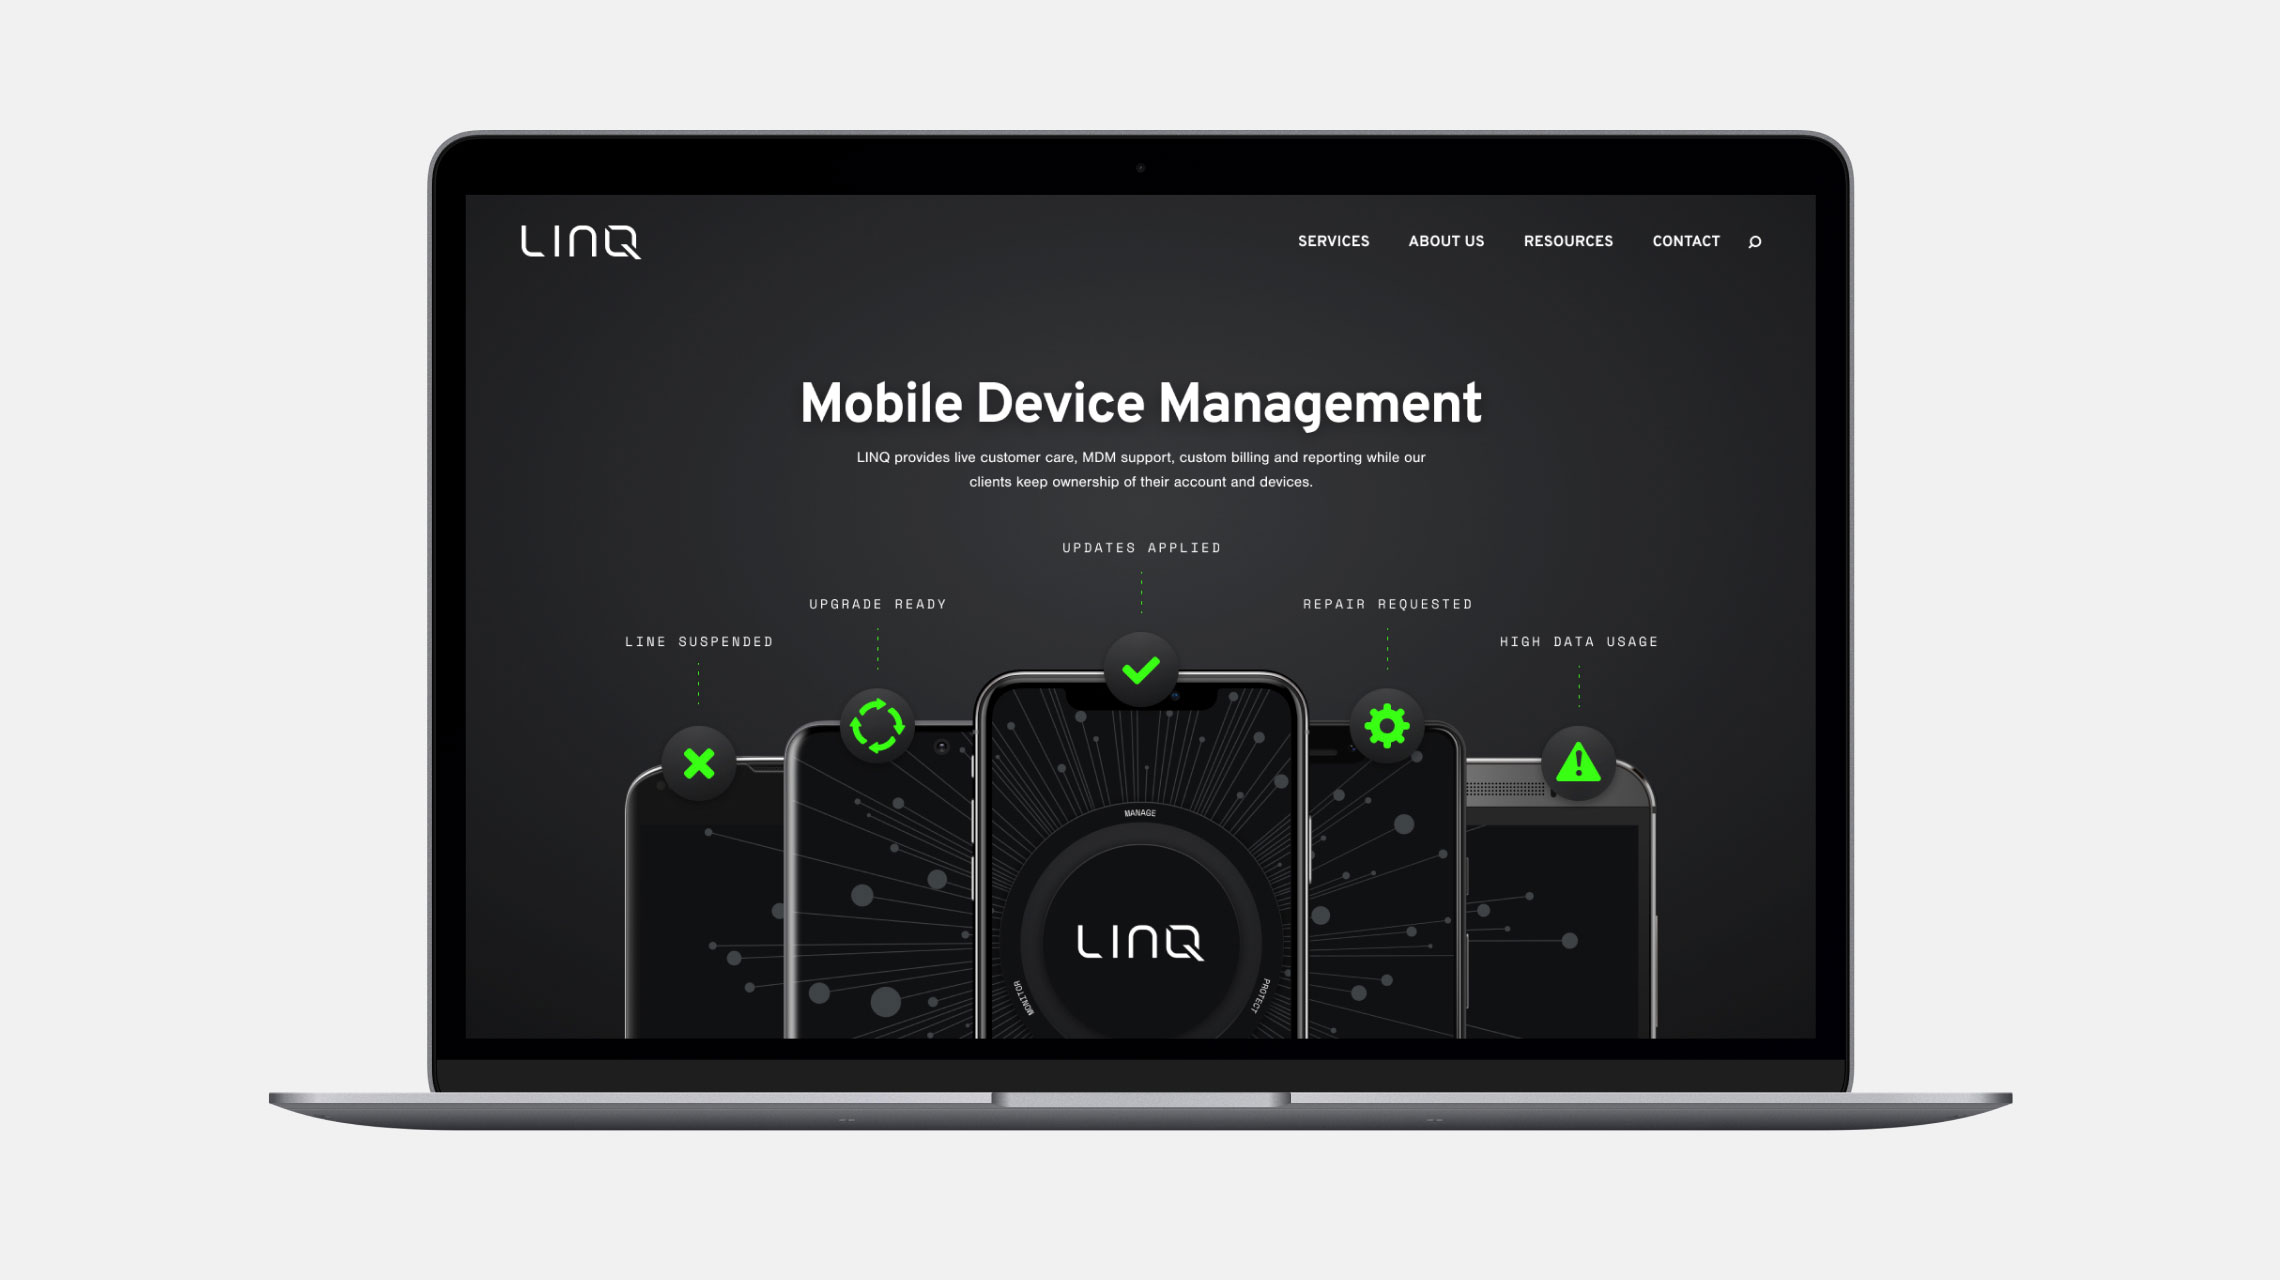 LINQ website displayed on notebook computer